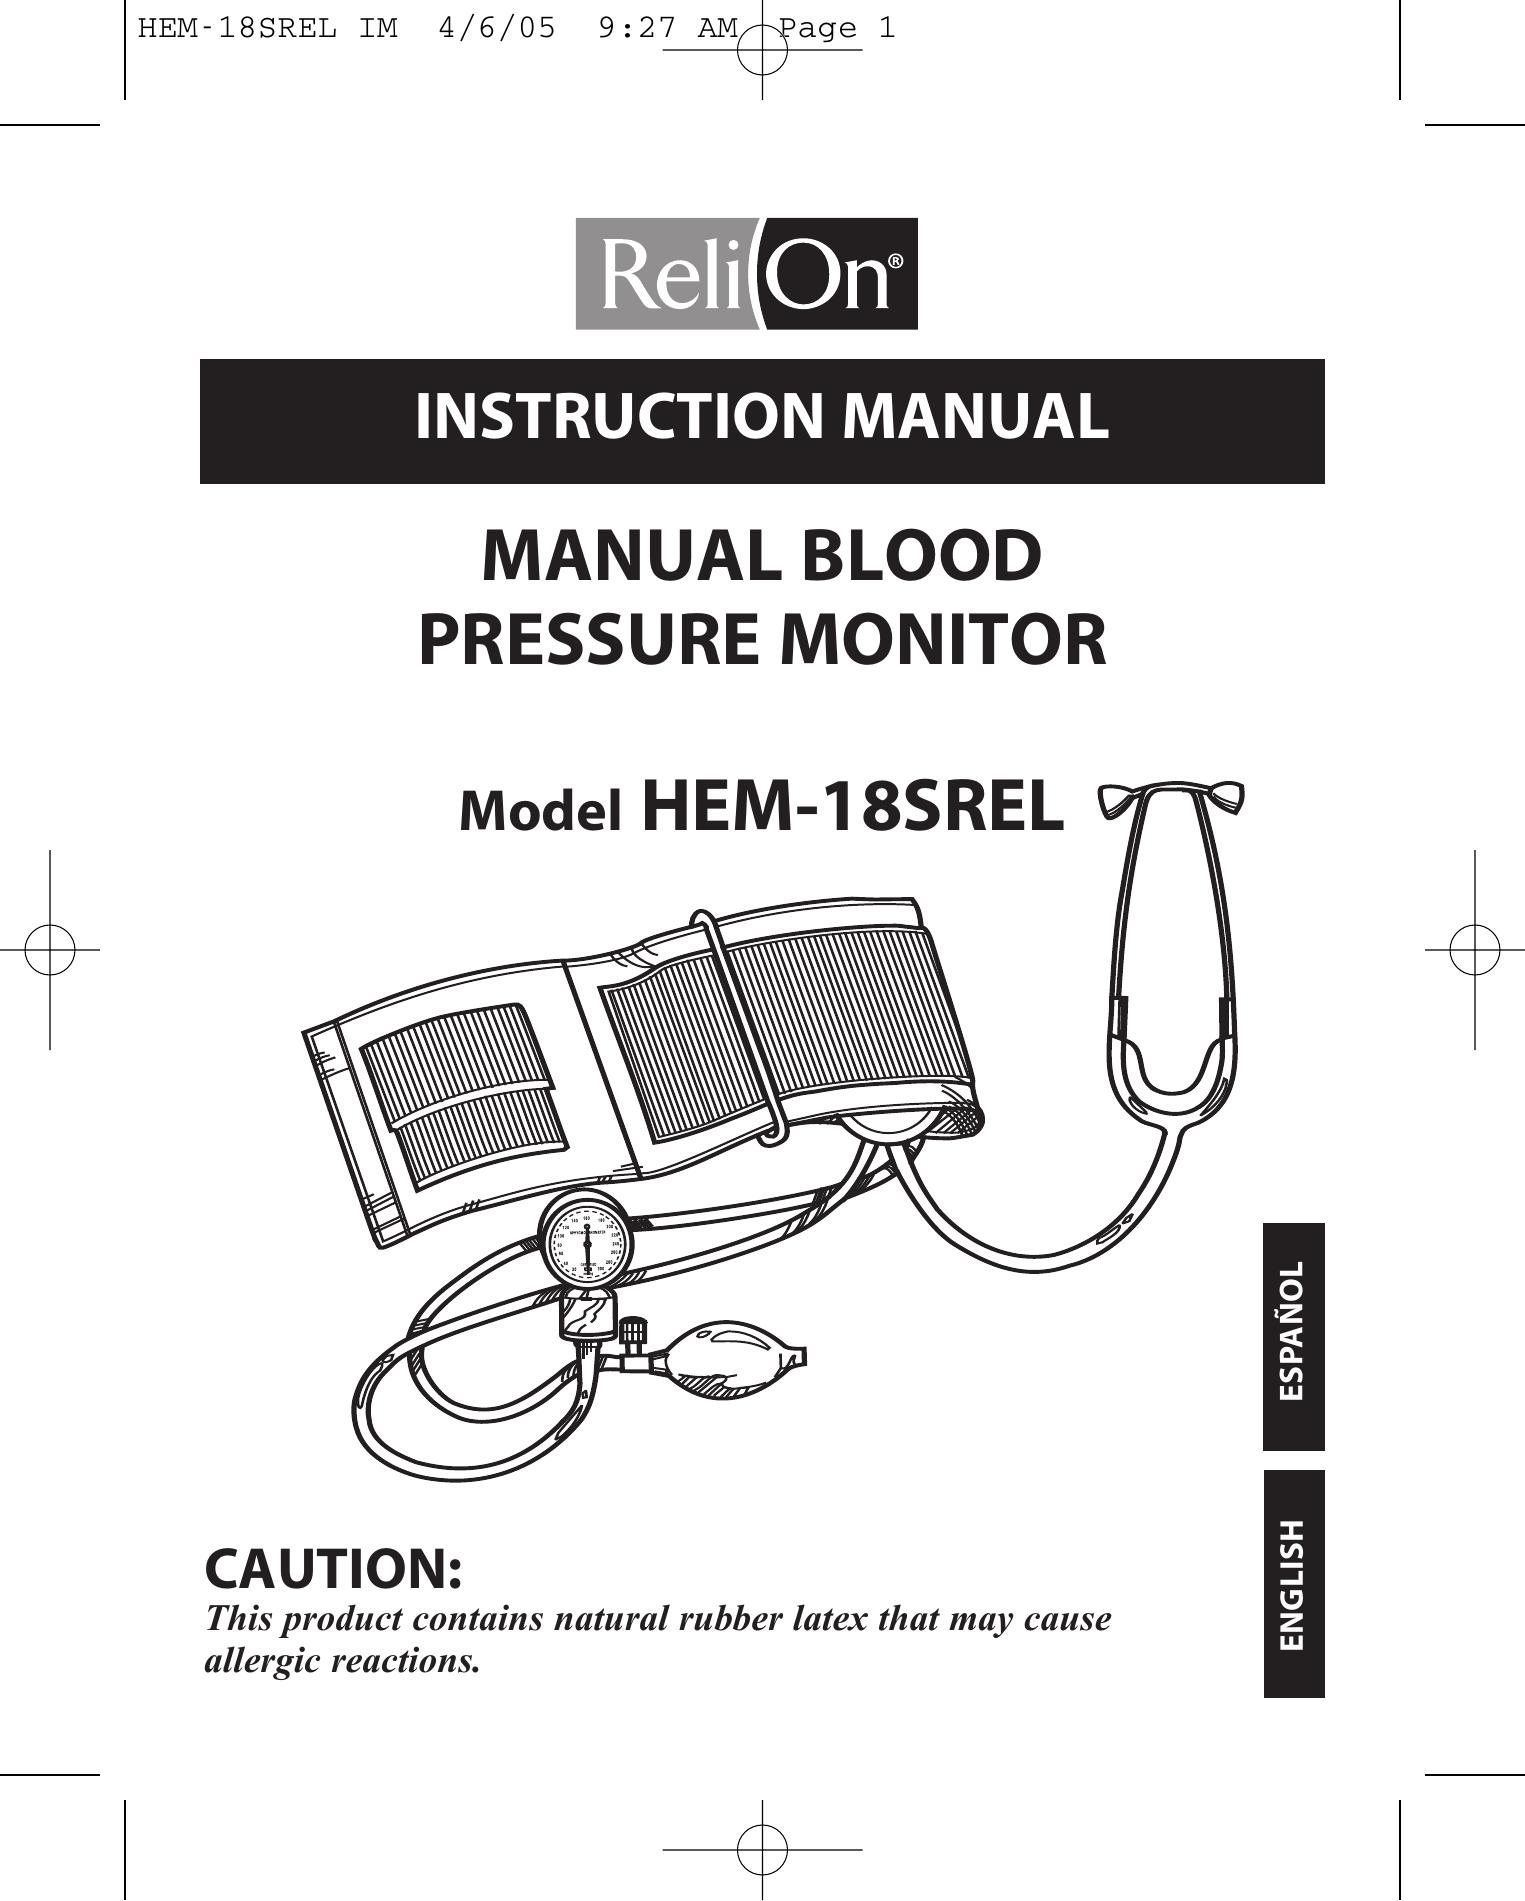 ReliOn HEM-18SREL Blood Pressure Monitor User Manual